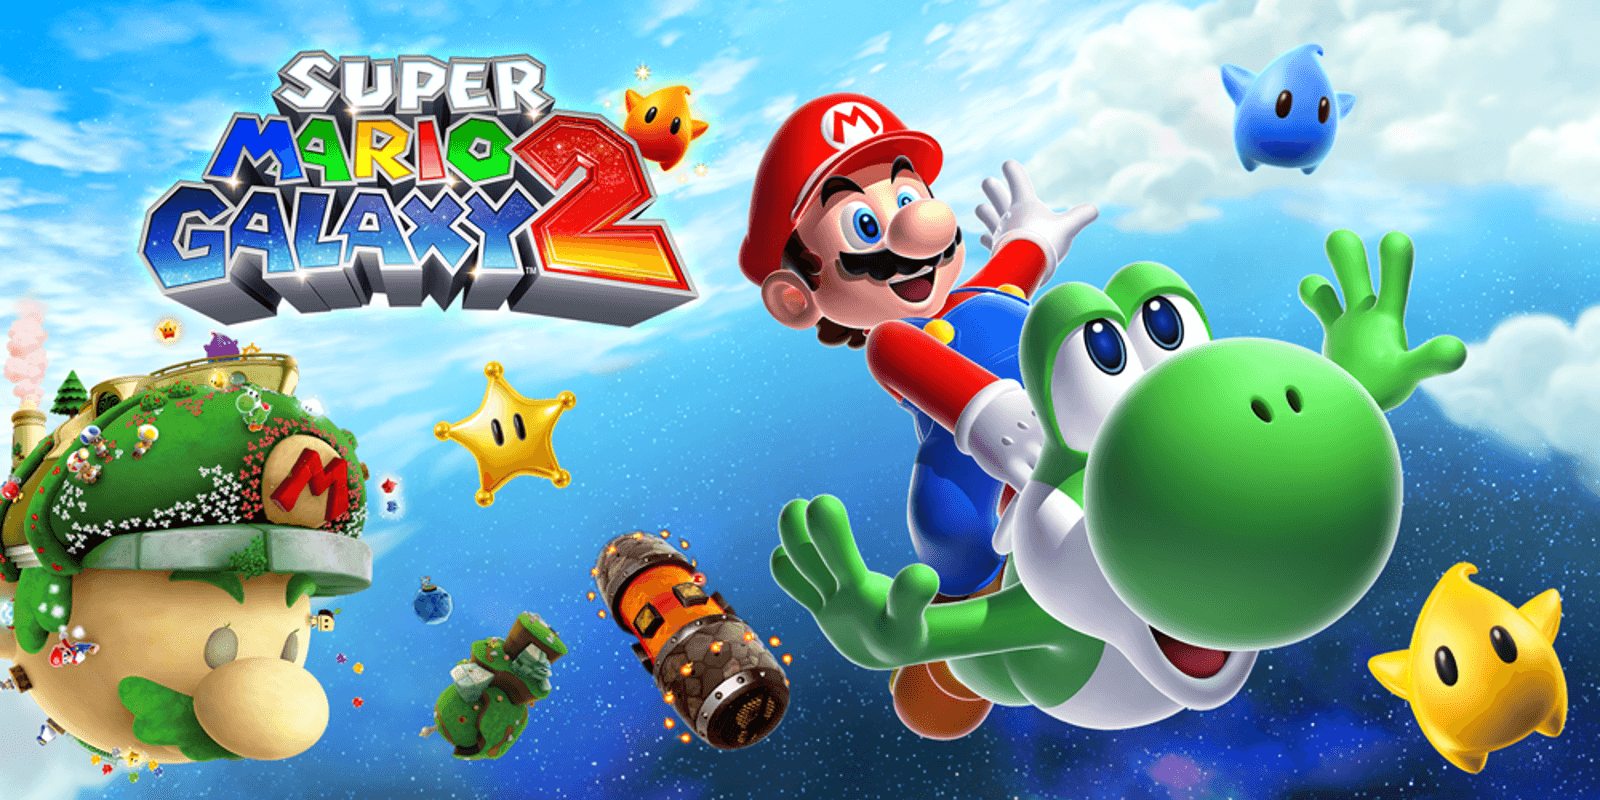 Nintendo May Release New Paper Mario, ReRelease Classic Mario Games